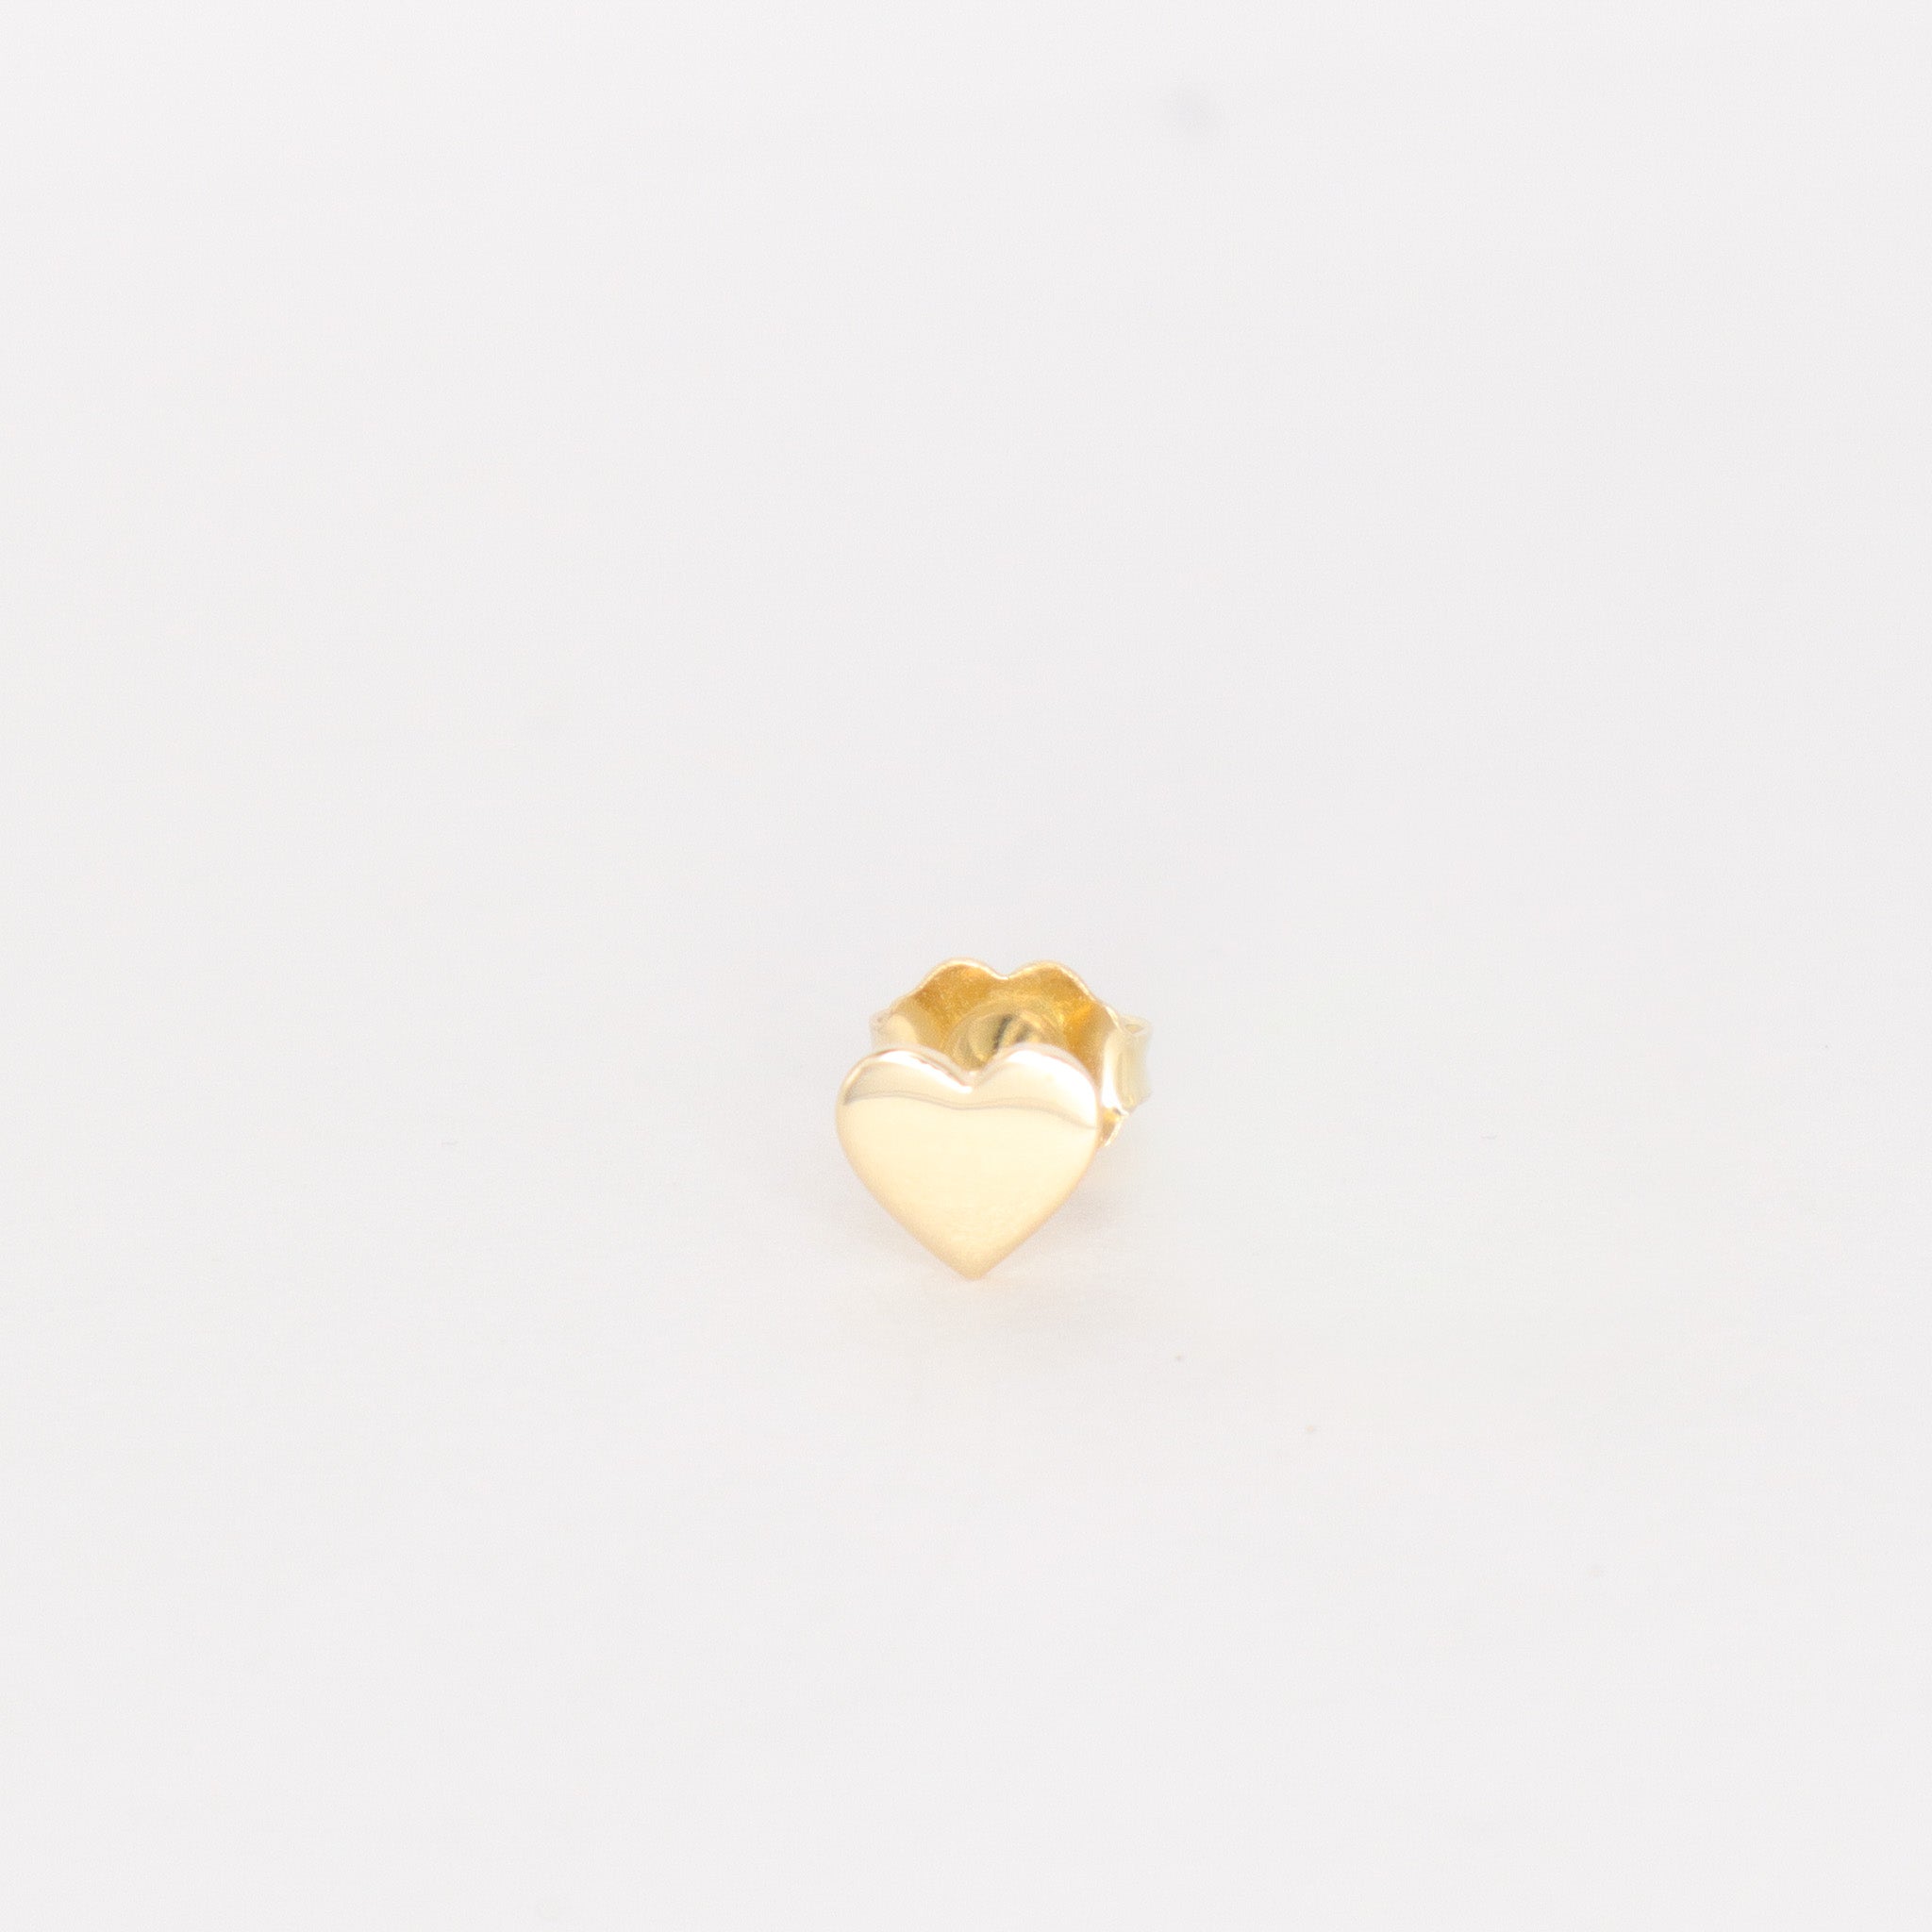 Fine Jewelry Line: Single Tiny Heart Stud Earring, featured image